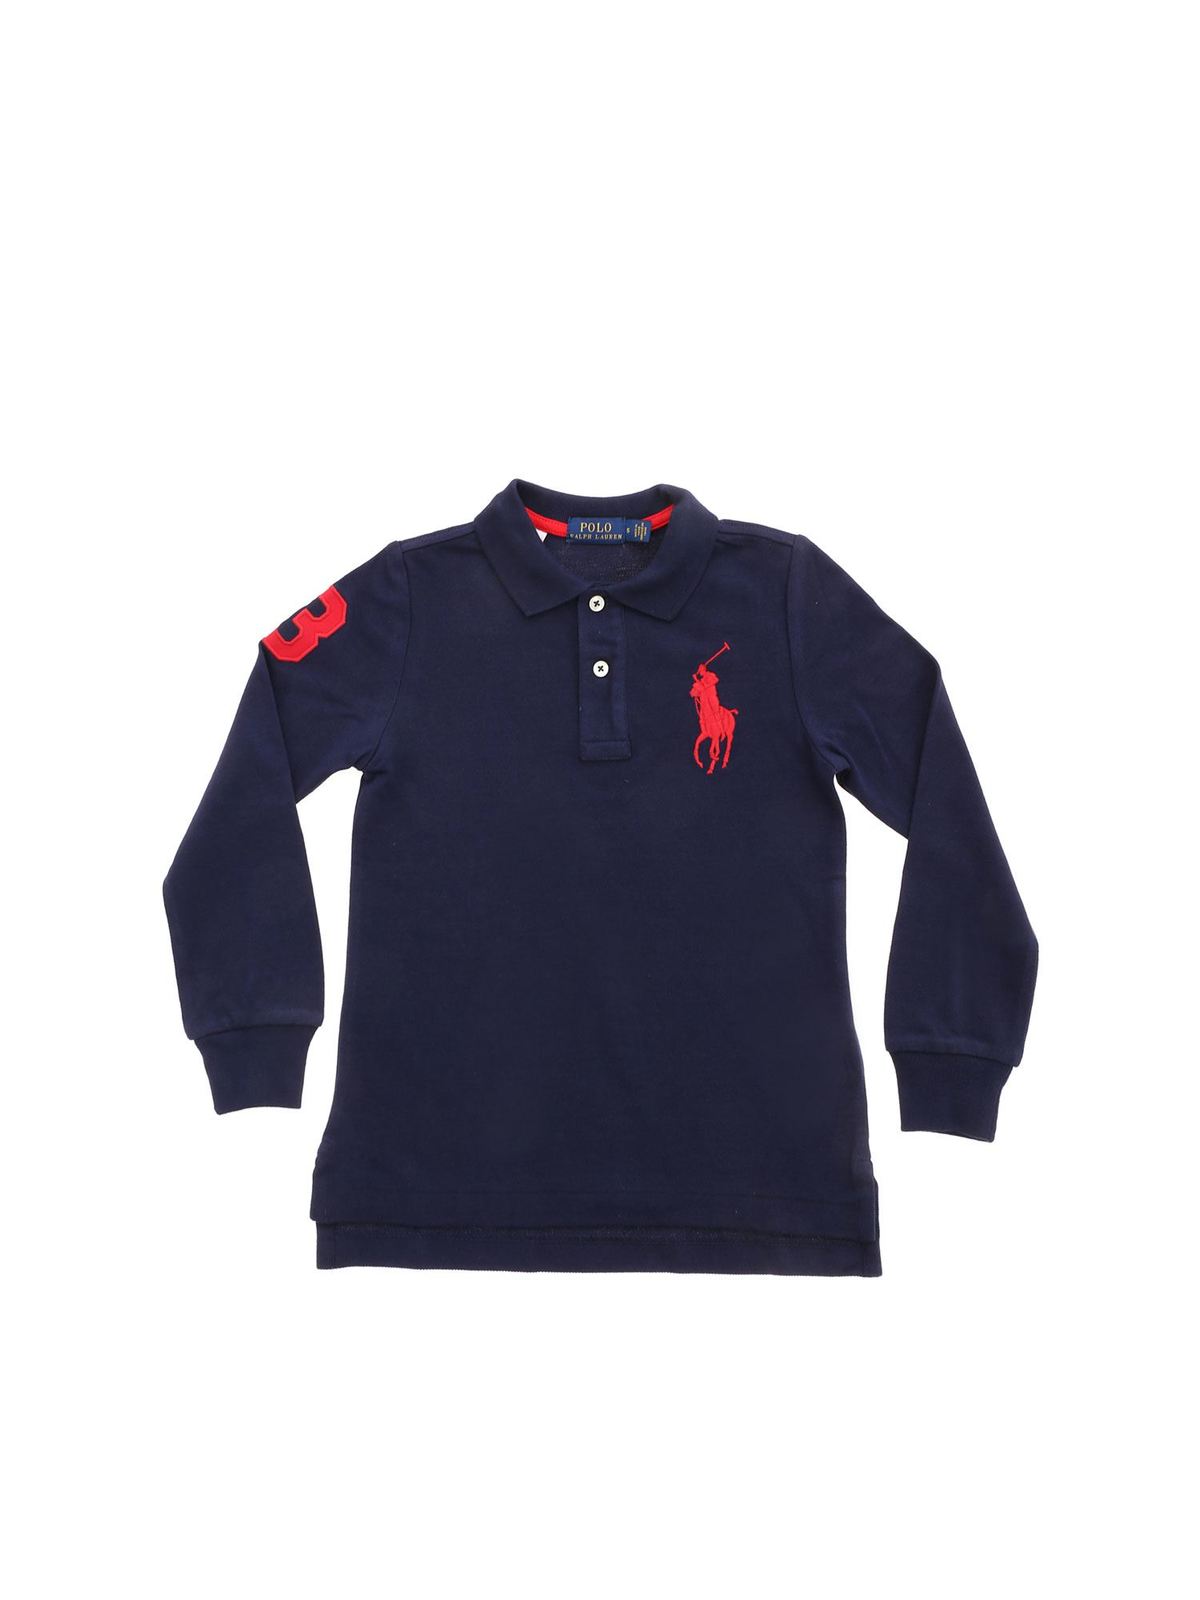 blue and red ralph lauren polo shirt